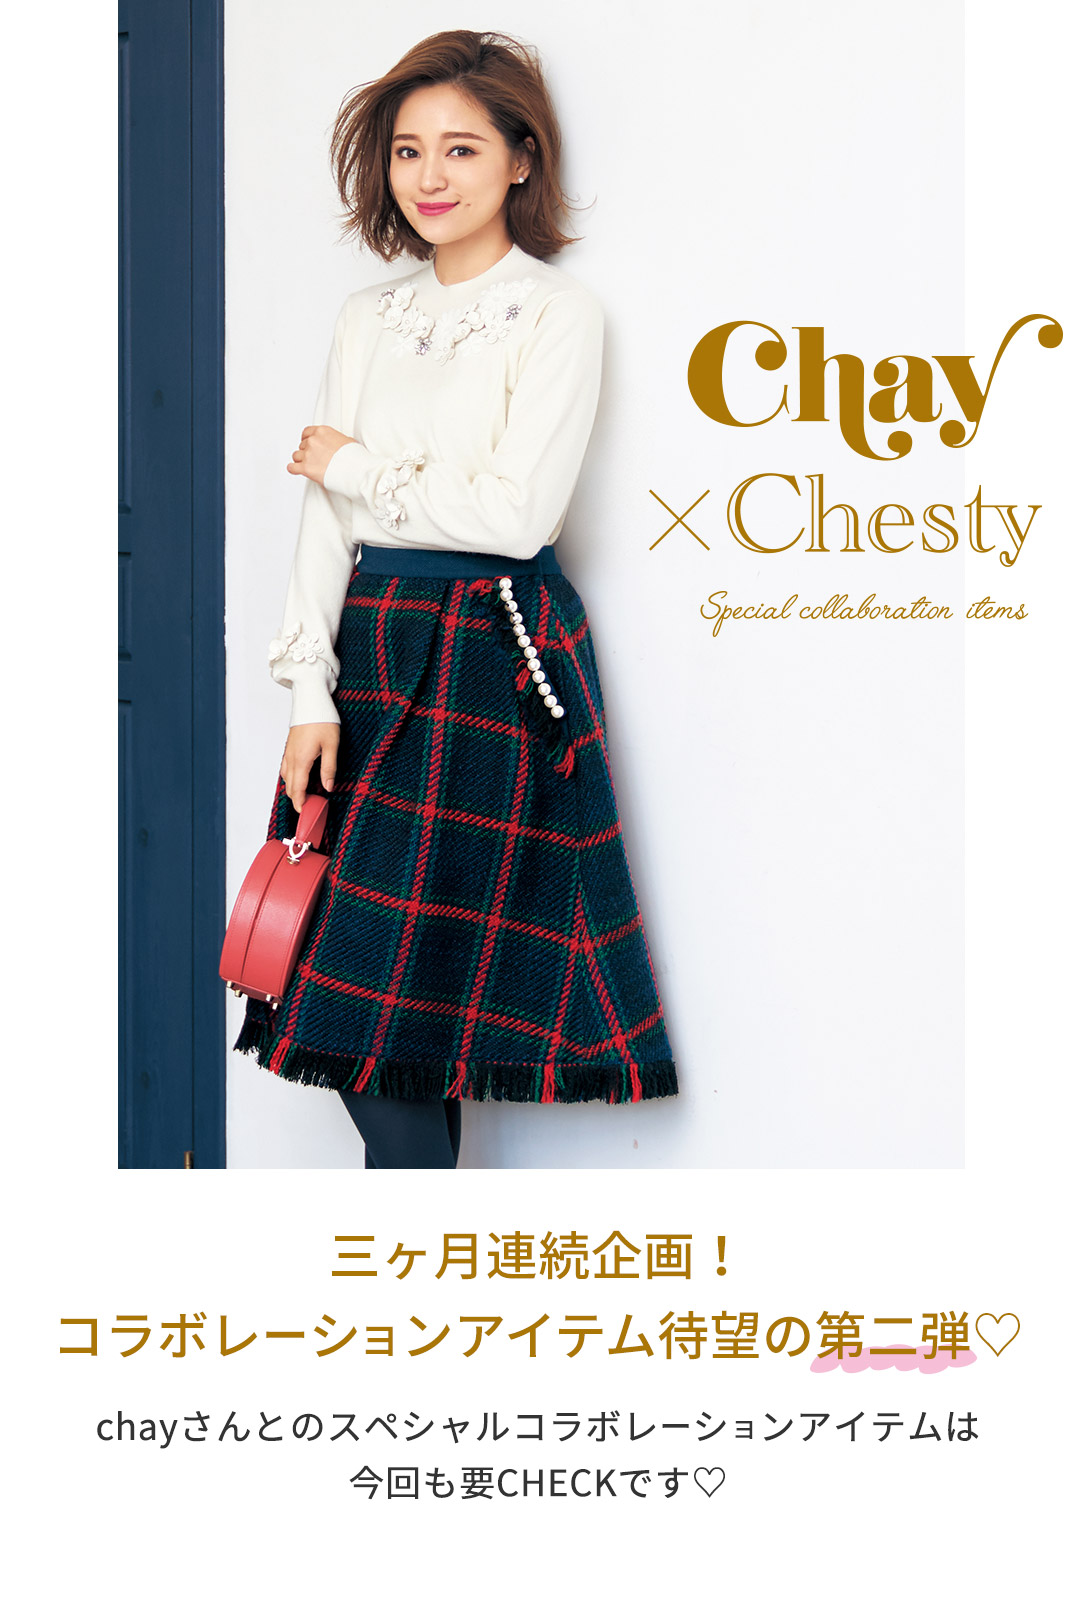 Chesty（チェスティ）chay x chesty コラボレーションアイテムの第二弾 